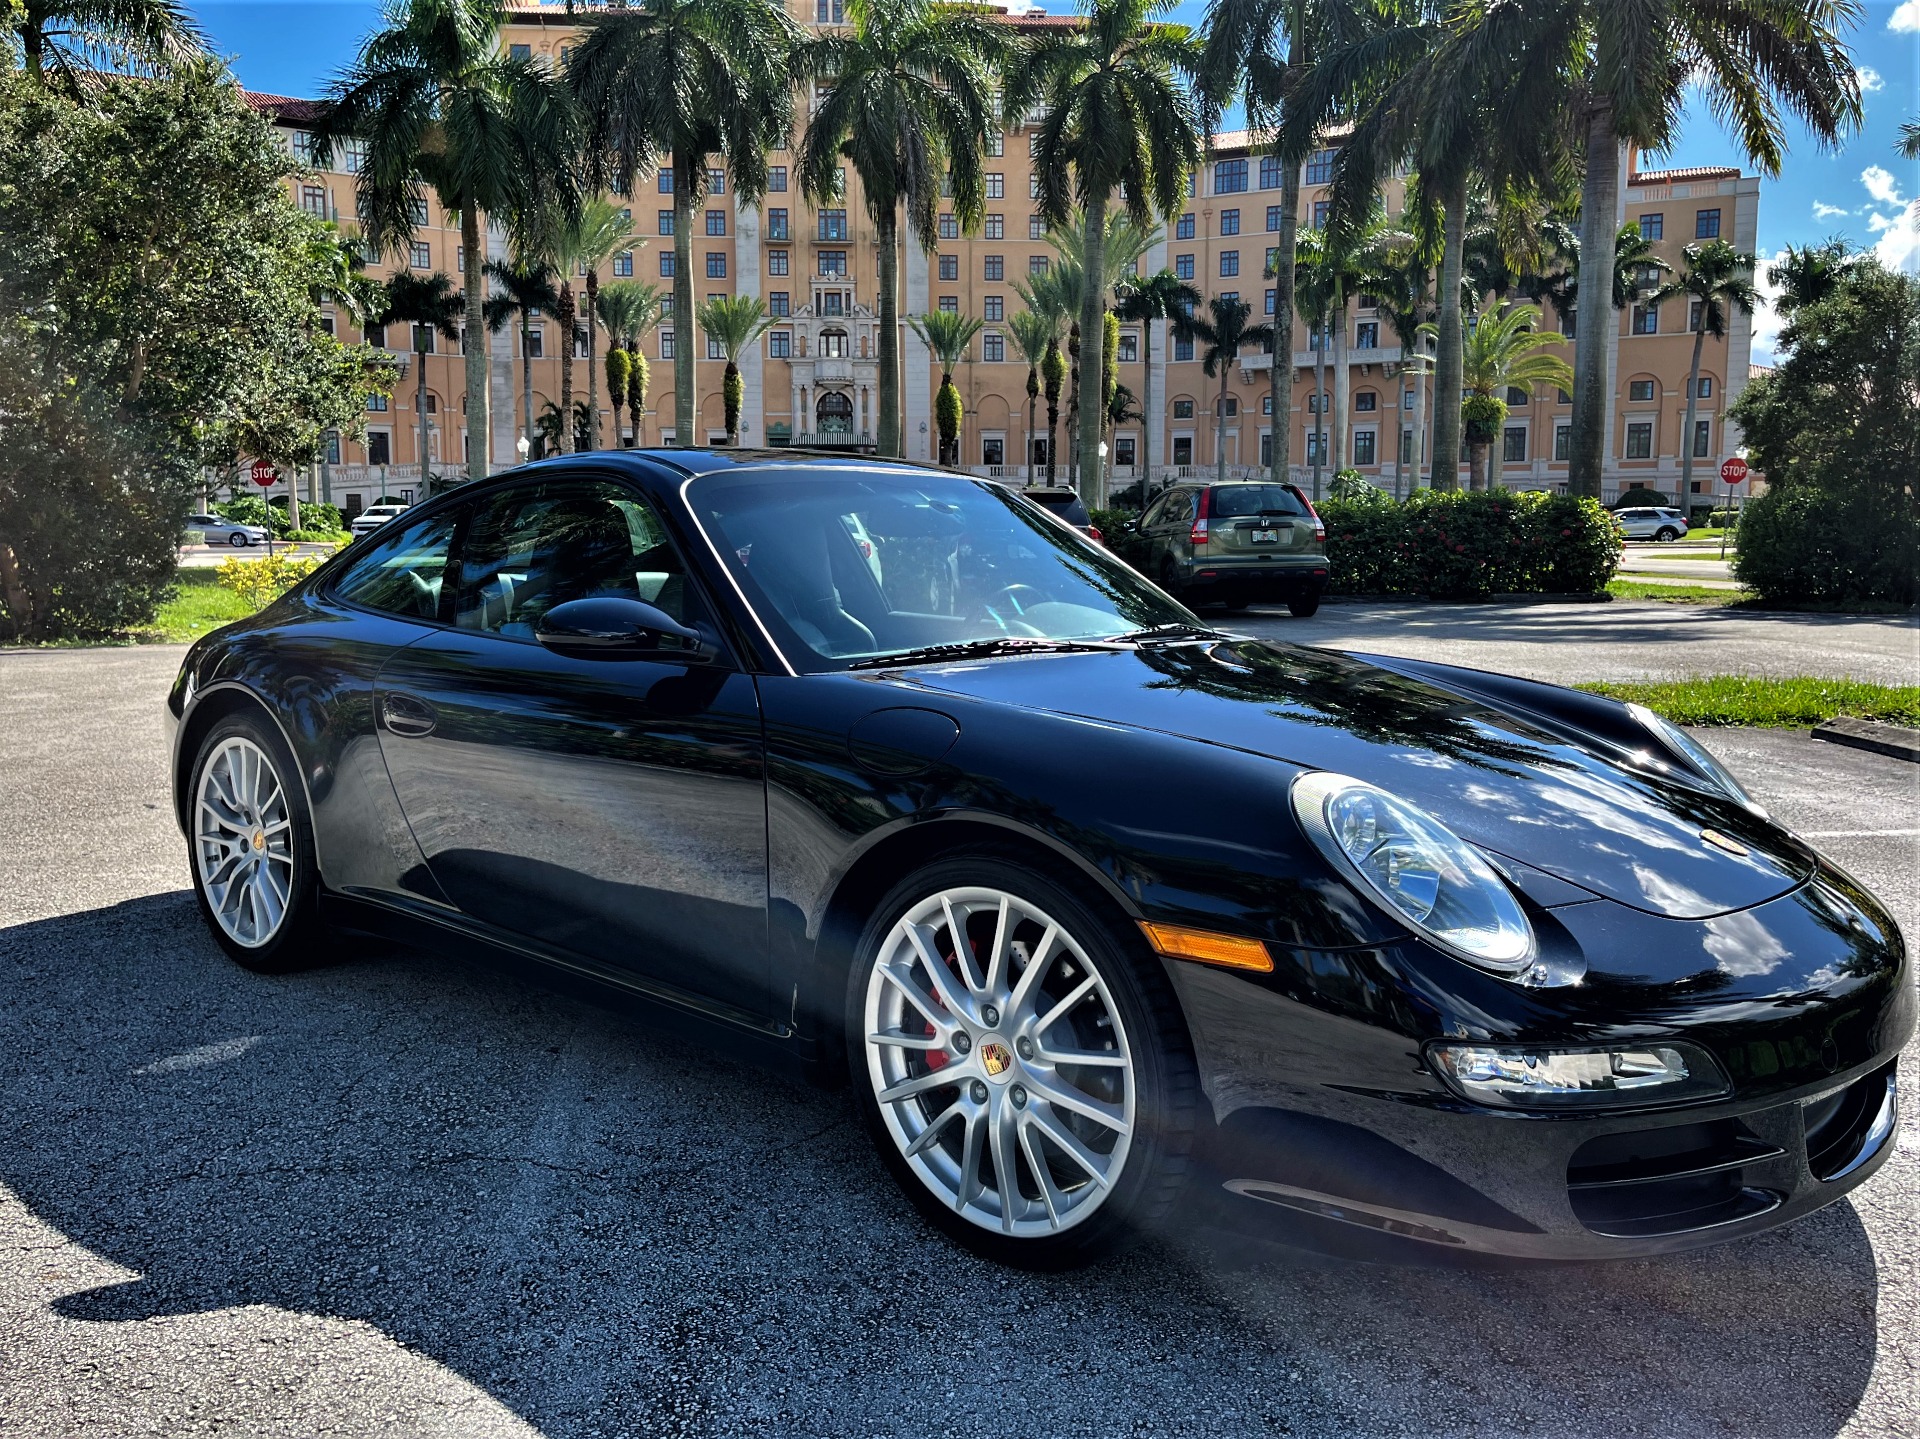 Used 2007 Porsche 911 Carrera S for sale $63,850 at The Gables Sports Cars in Miami FL 33146 1